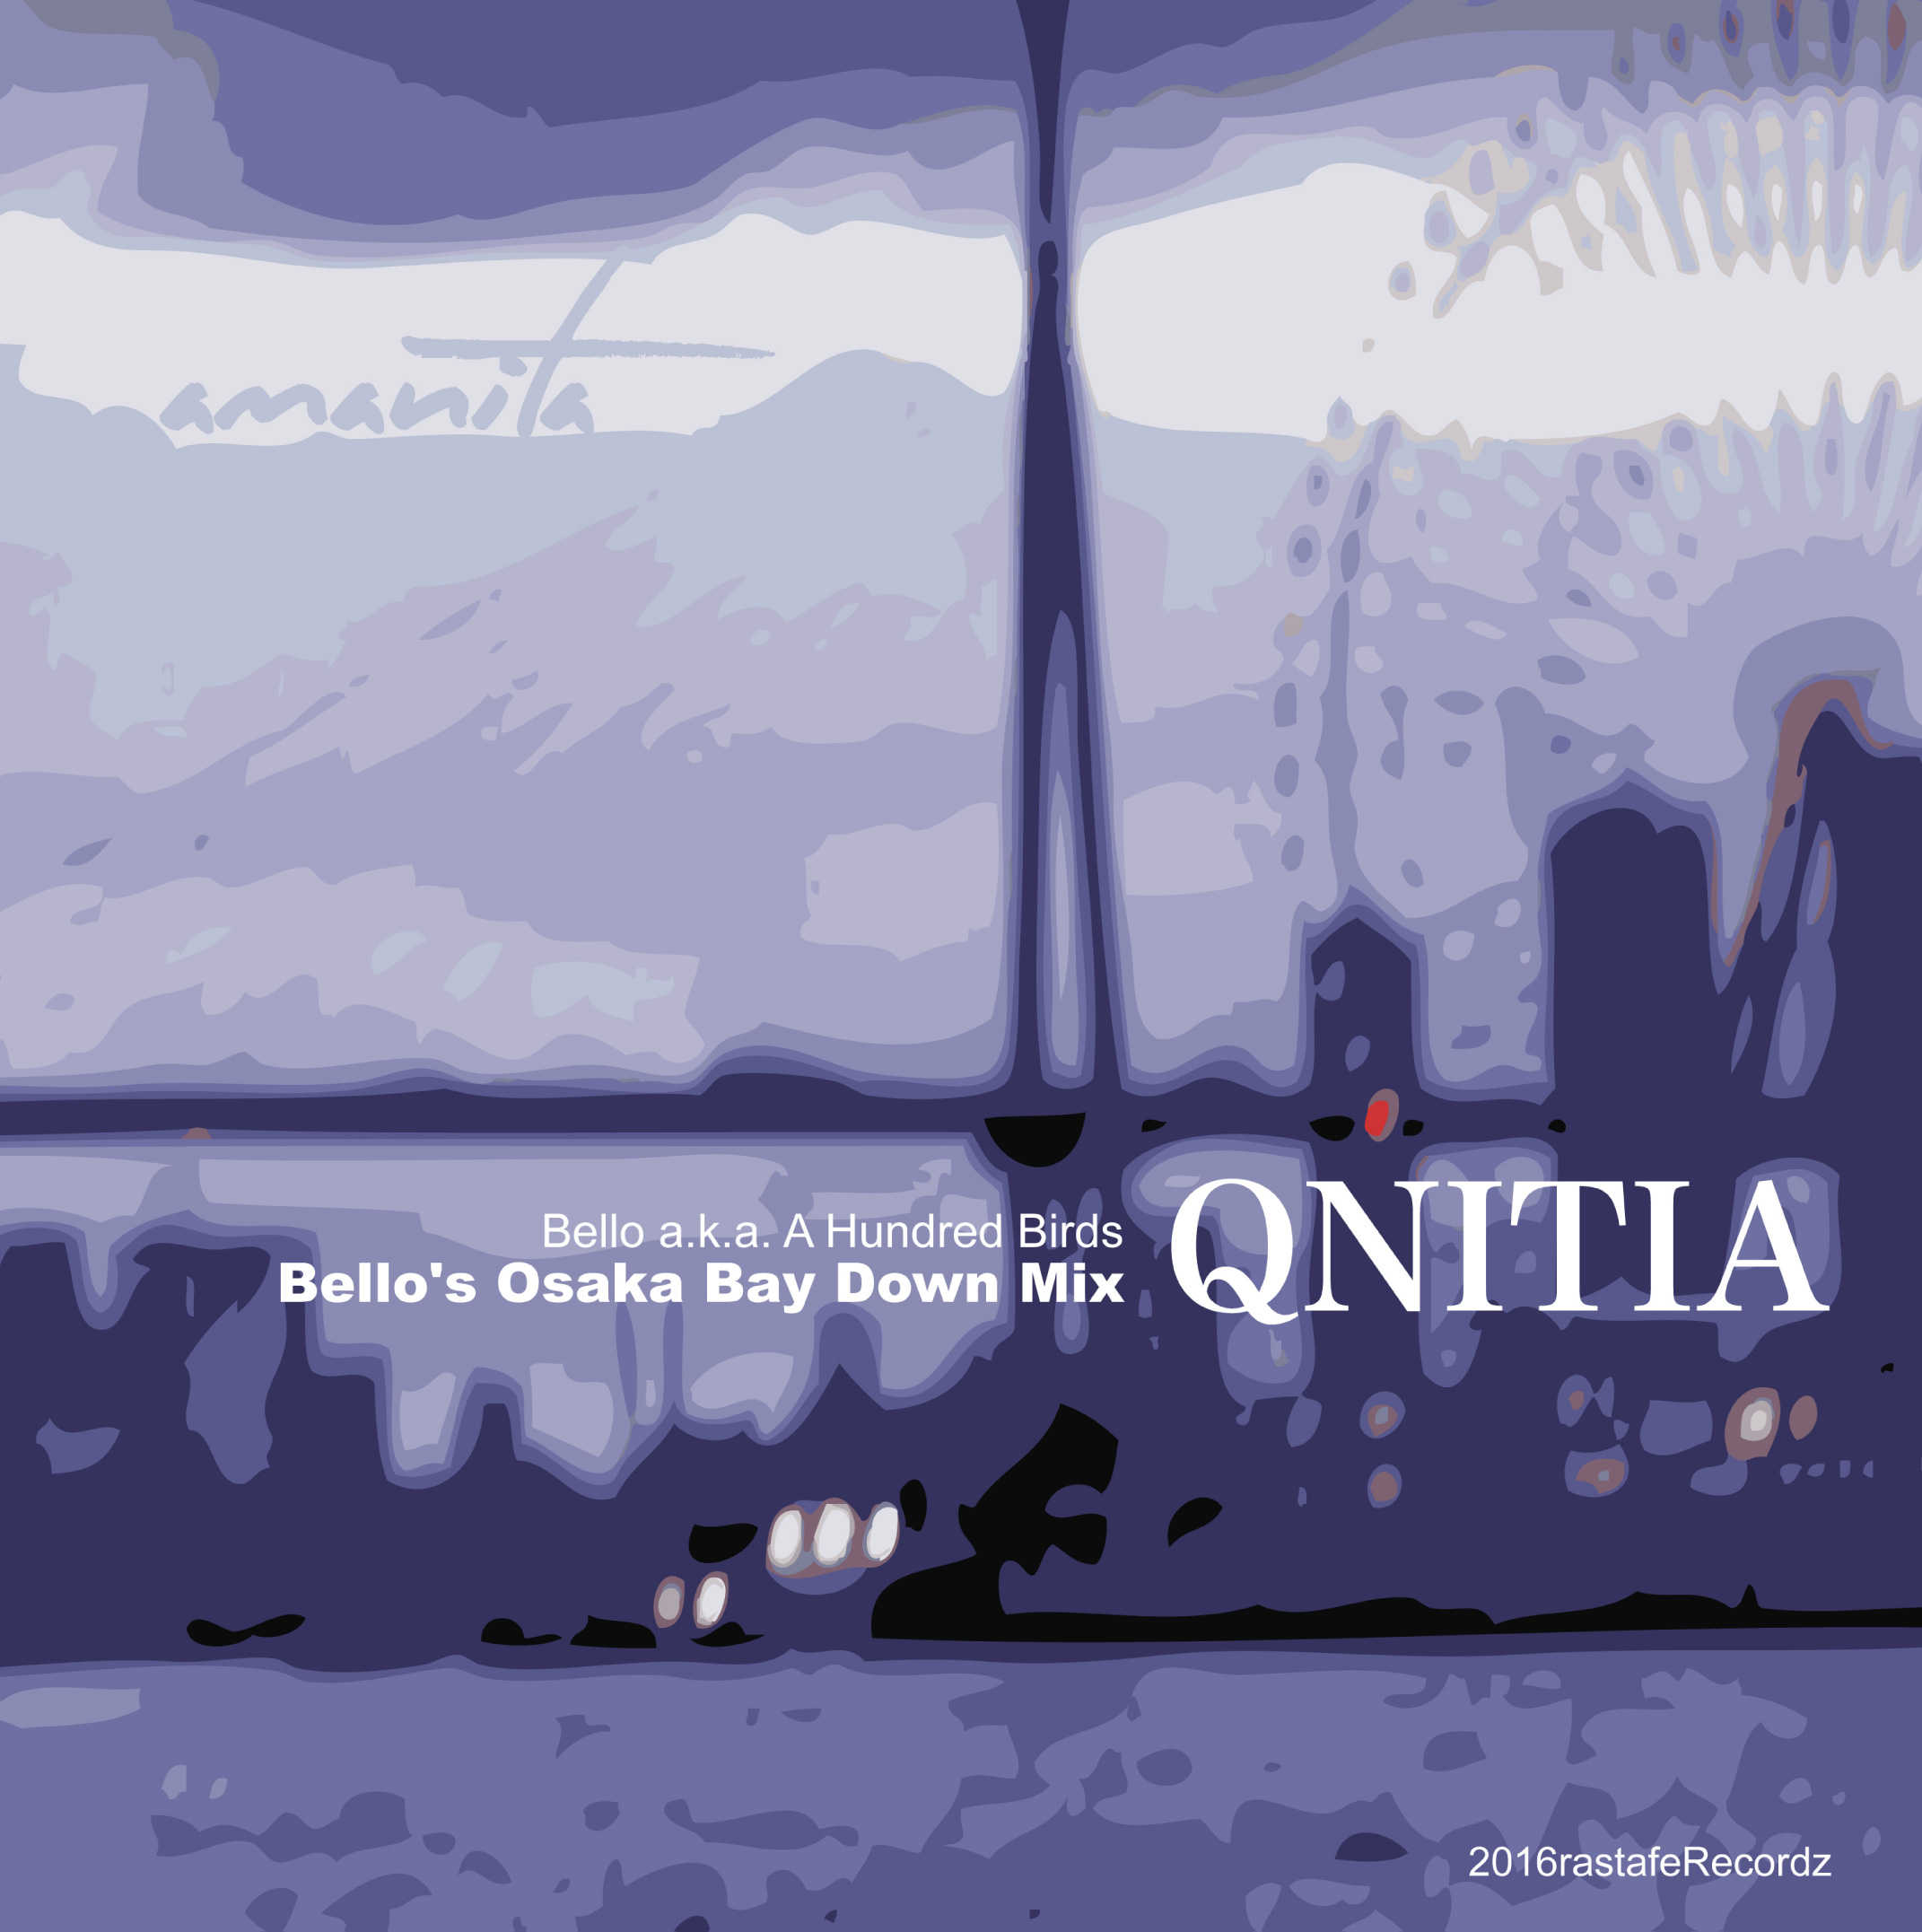 QNITIA (Osaka Bay Down Mix) Remixed by Bello